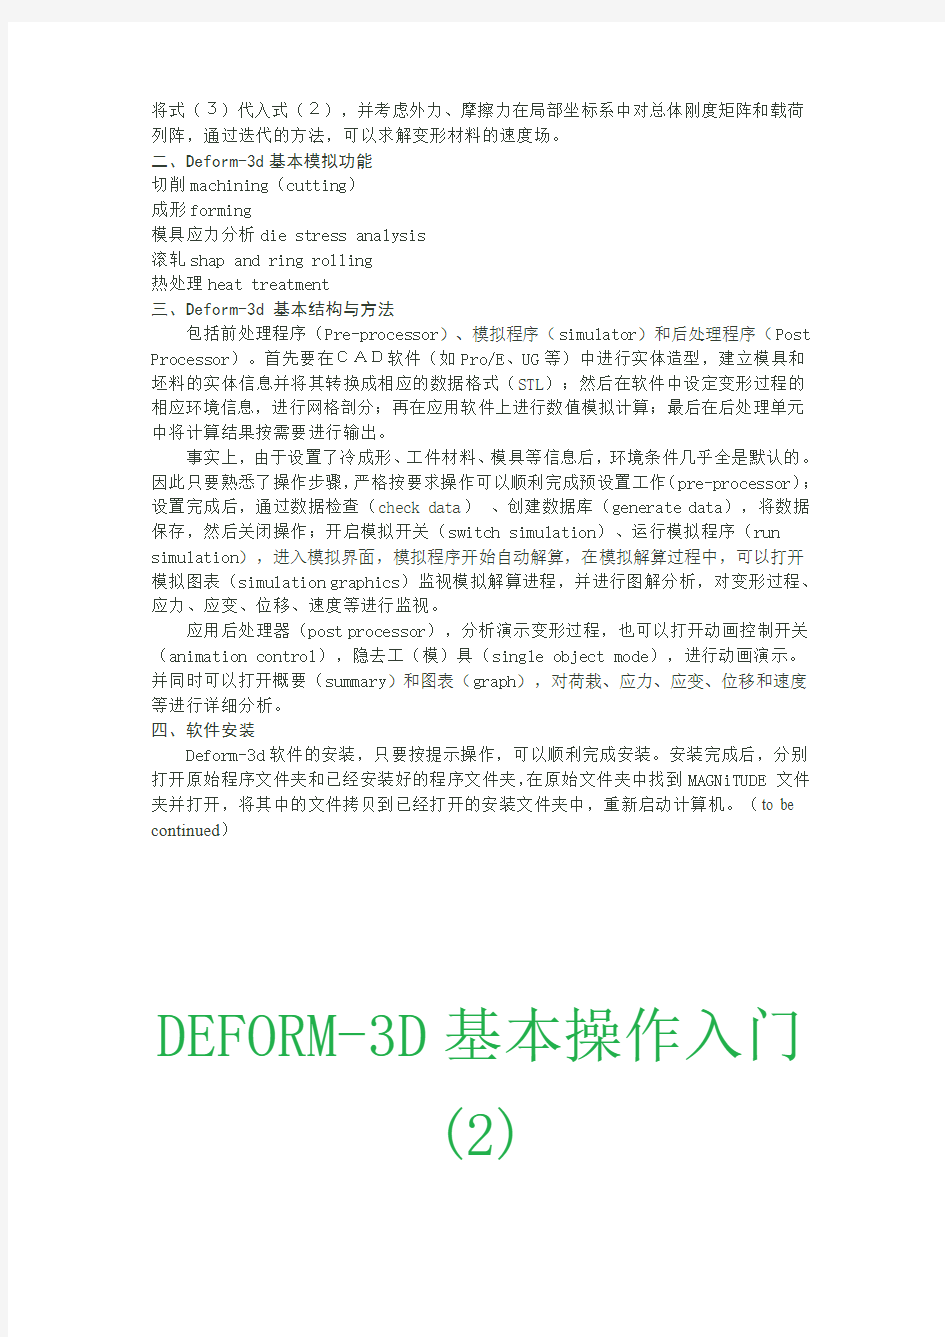 DEFORM 3D基本操作入门